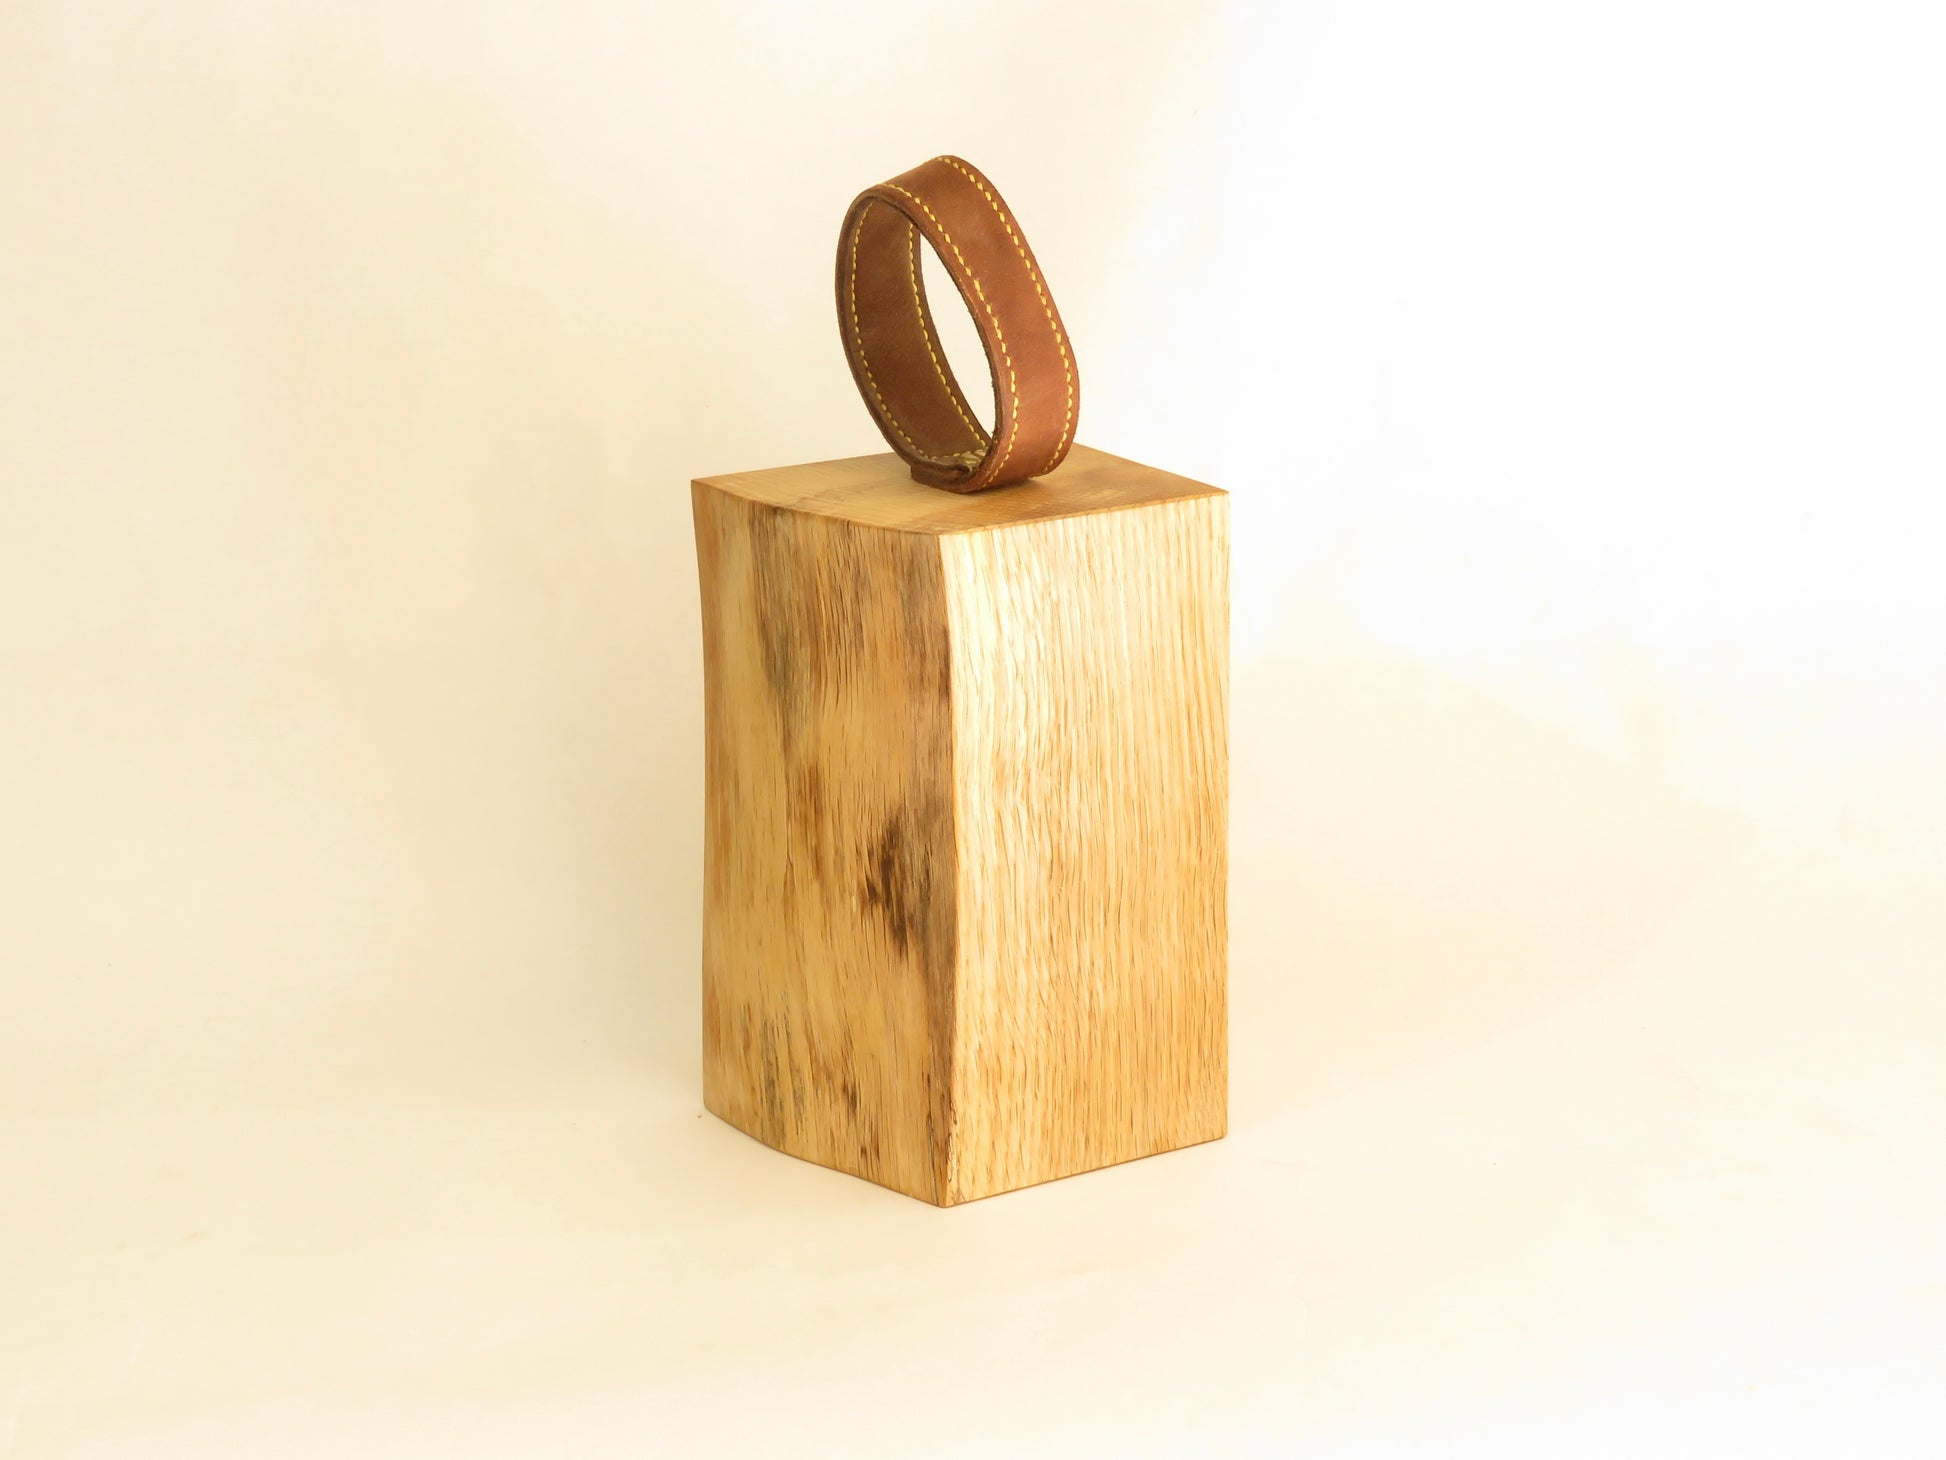 Sustainably sourced oak door stop with handmade brown leather handle